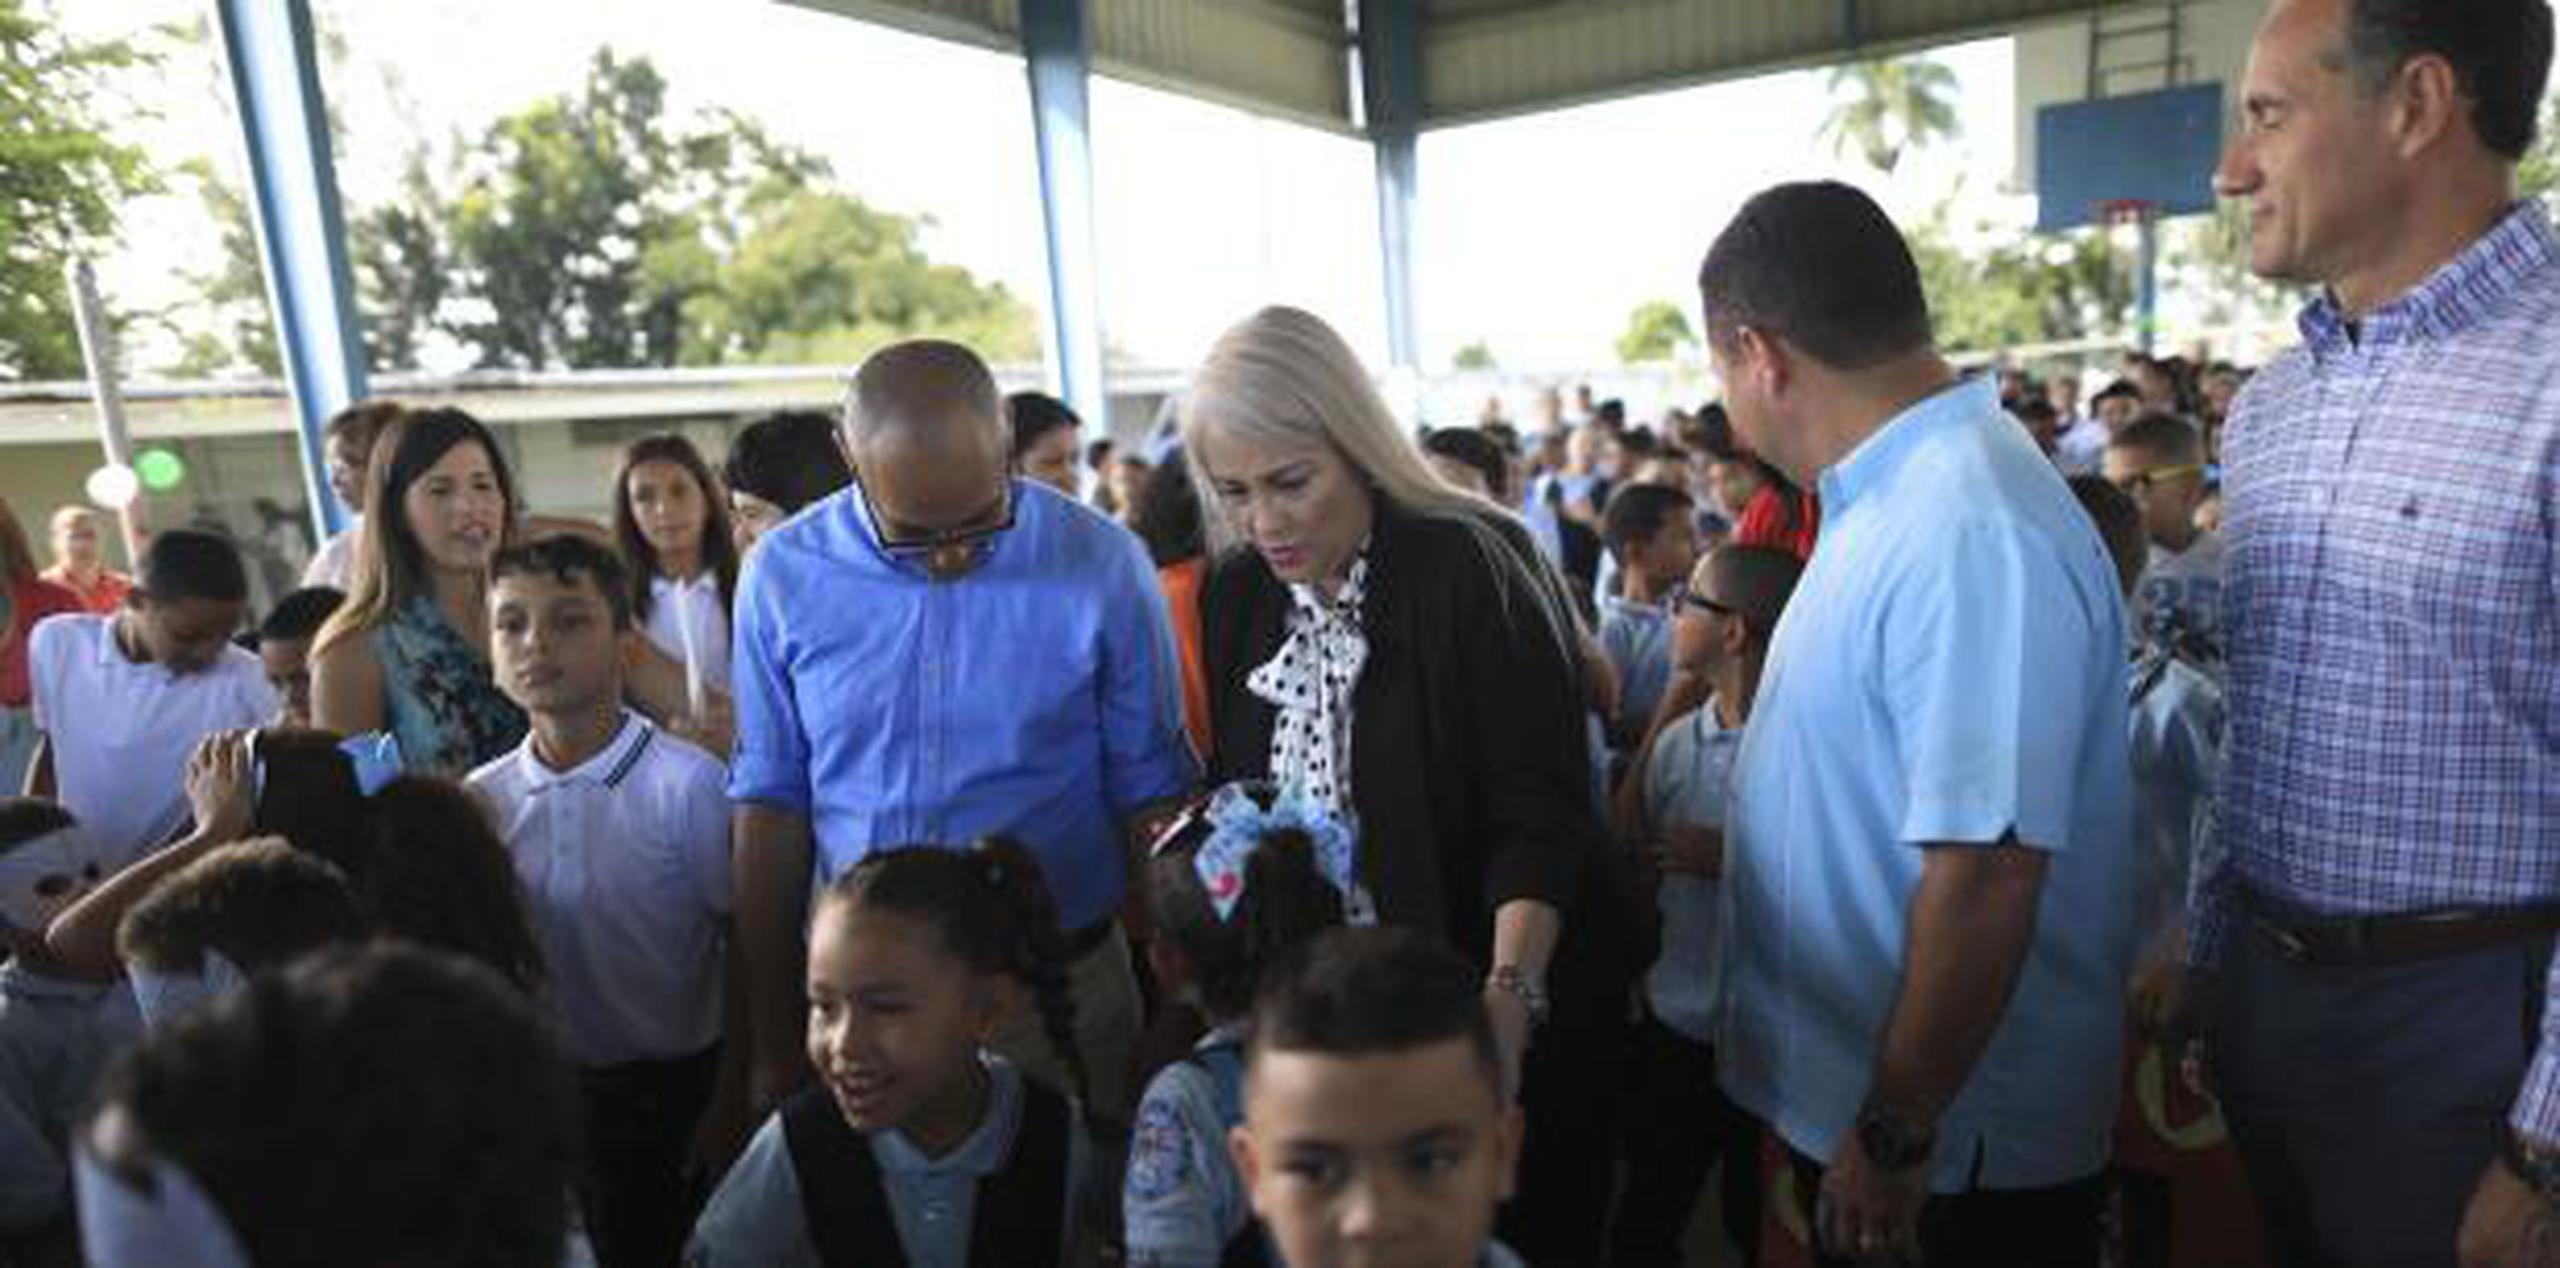 "Aquí puede estar la futura gobernadora o gobernador, representante o director escolar", dijo Vázquez. (xavier.araujo@gfrmedia.com)